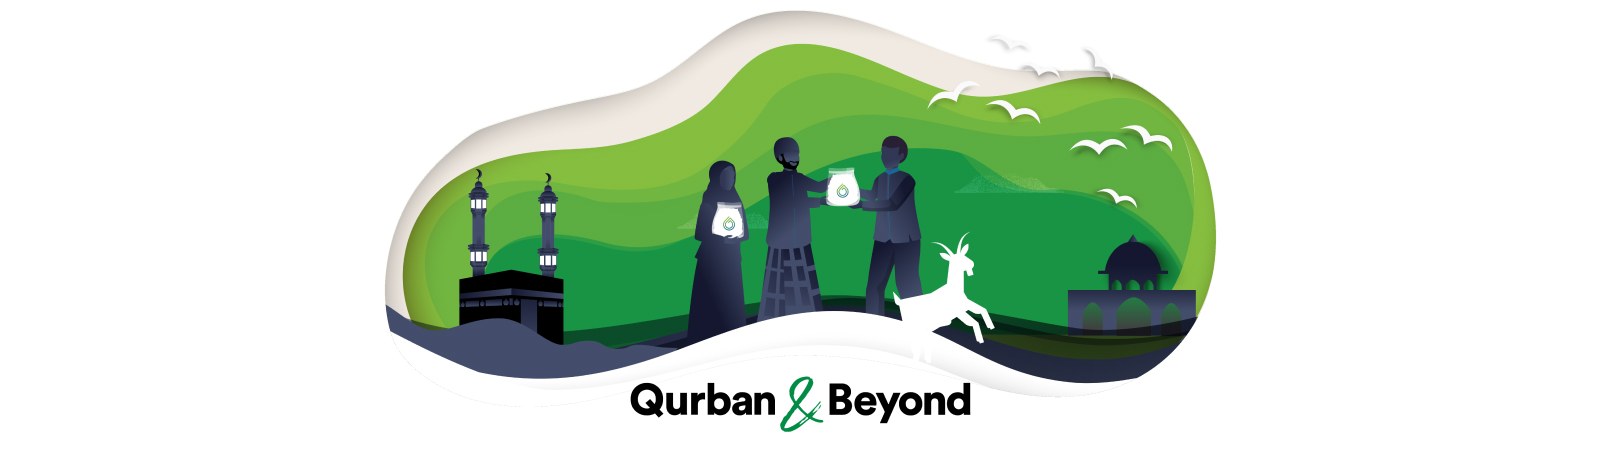 Qurban & Beyond